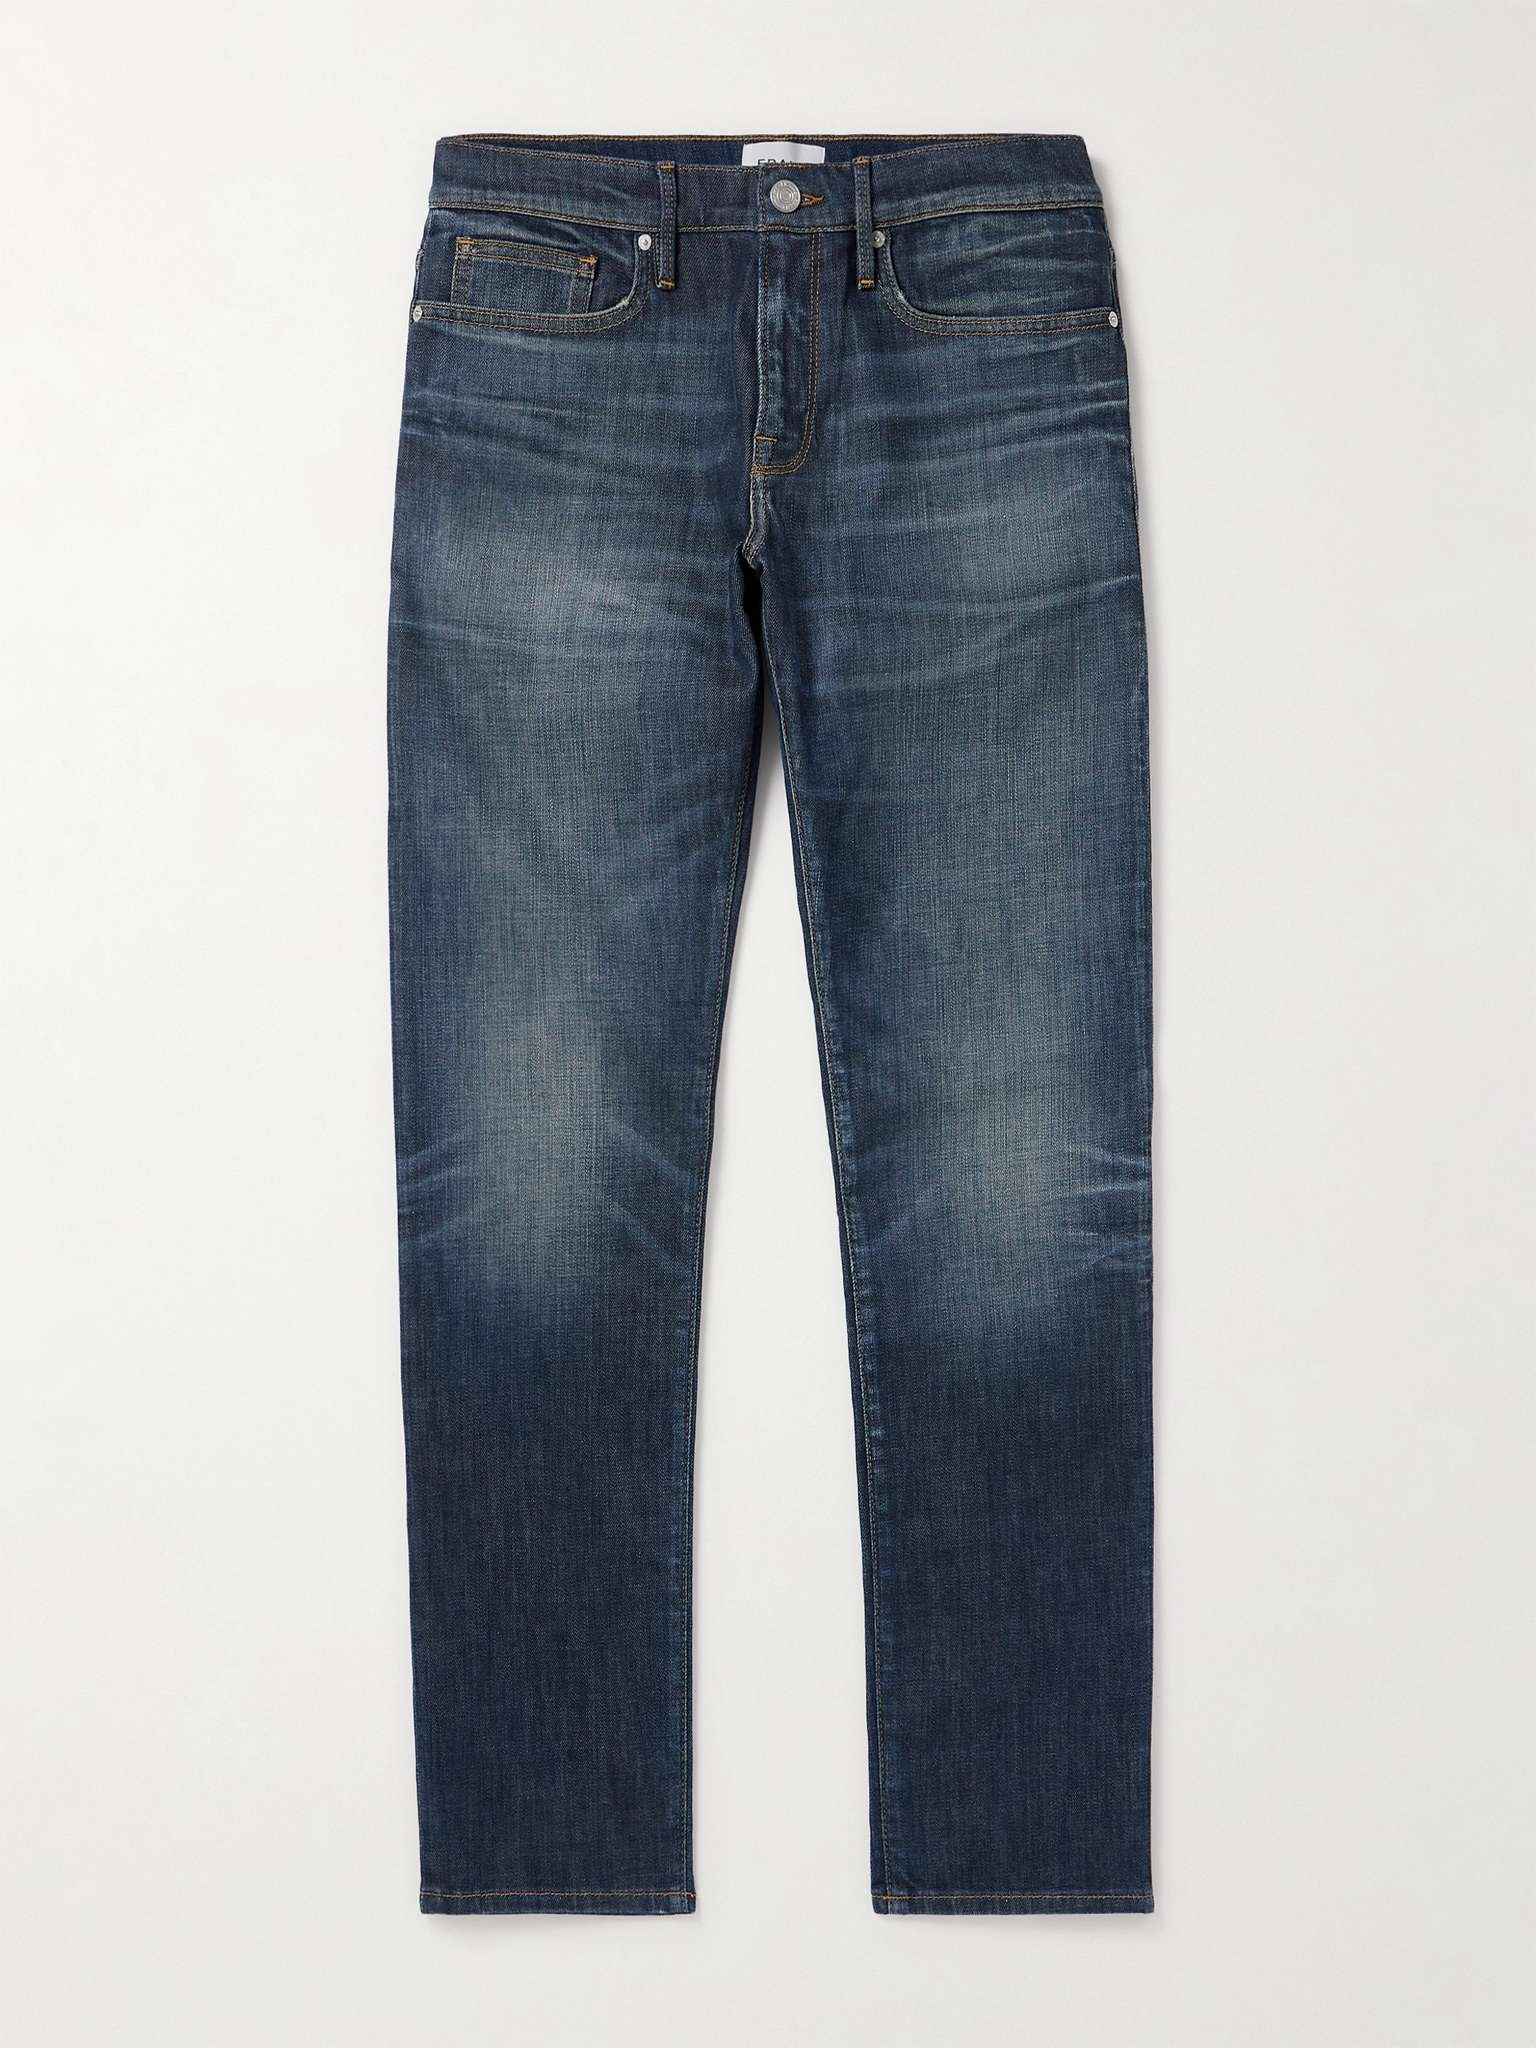 L'Homme Slim-Fit Dry Denim Jeans - 1